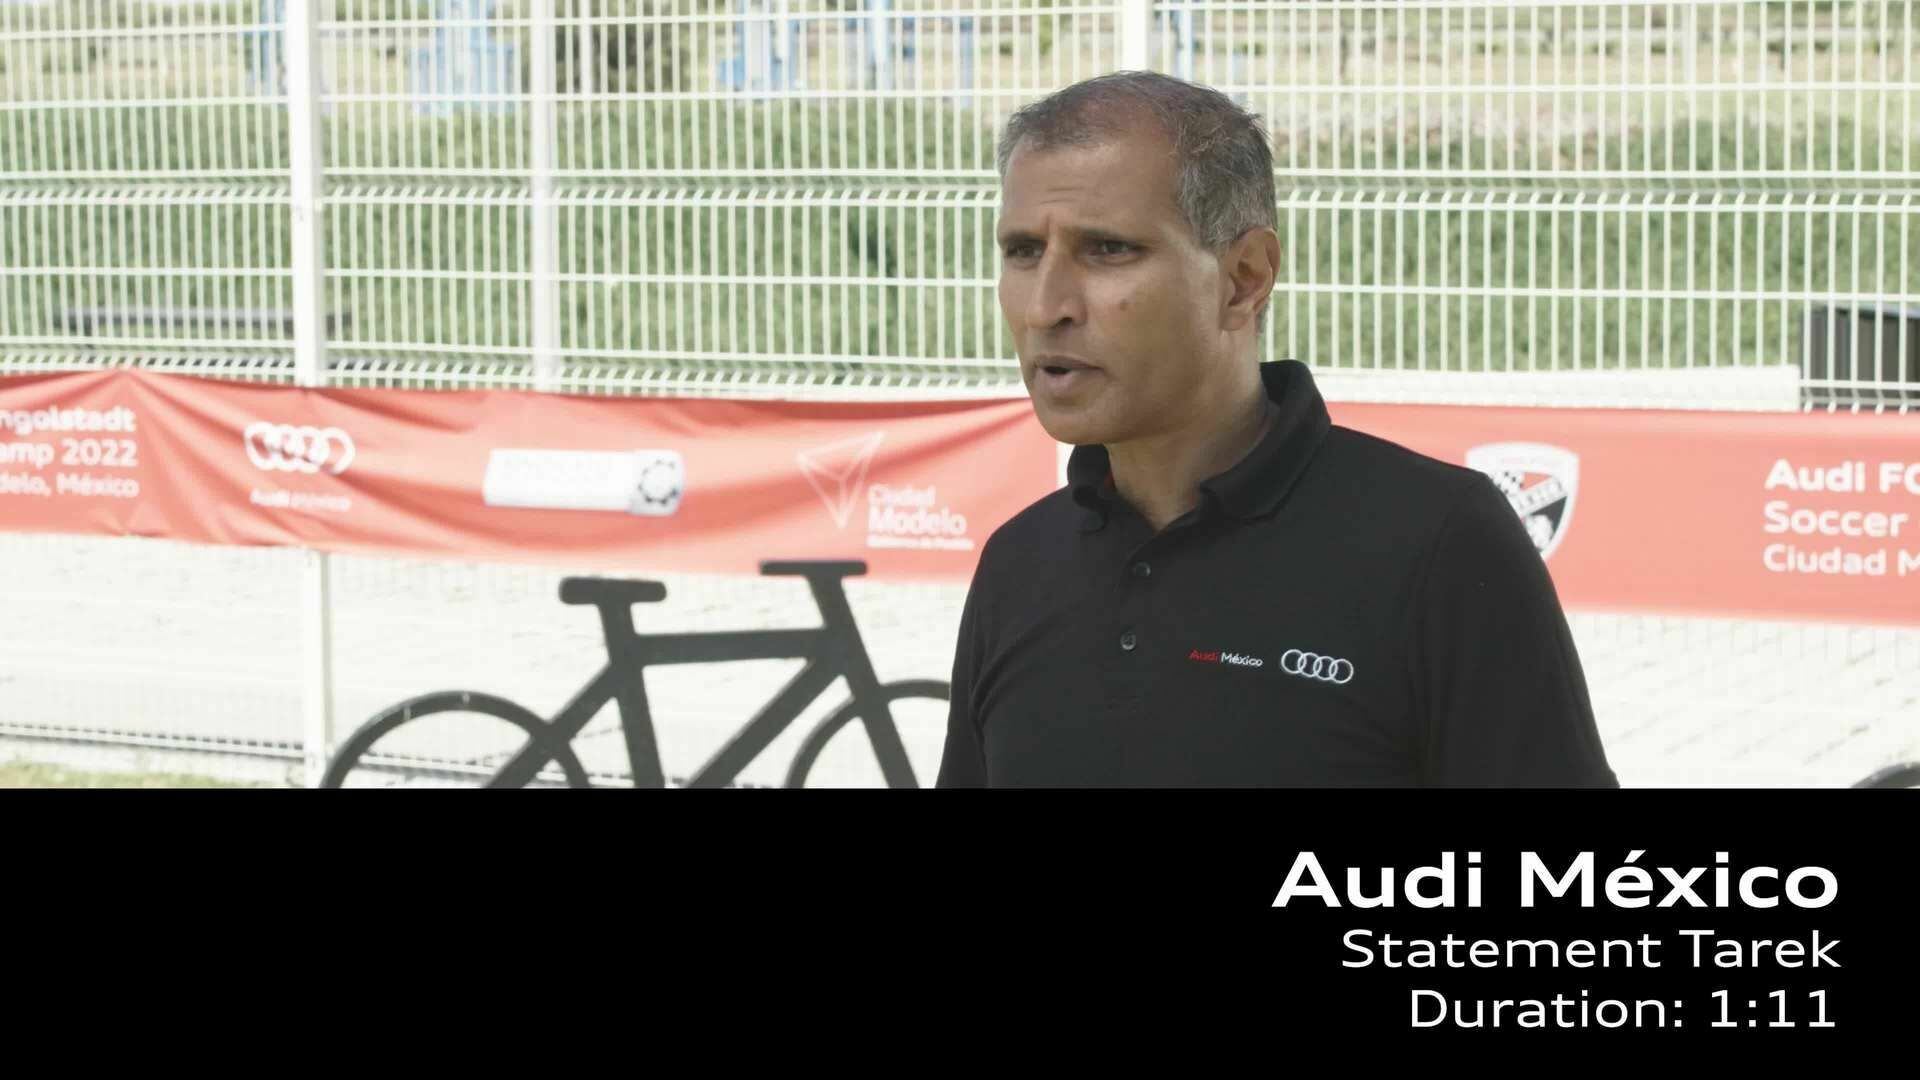 Footage: Production at Audi Mexiko